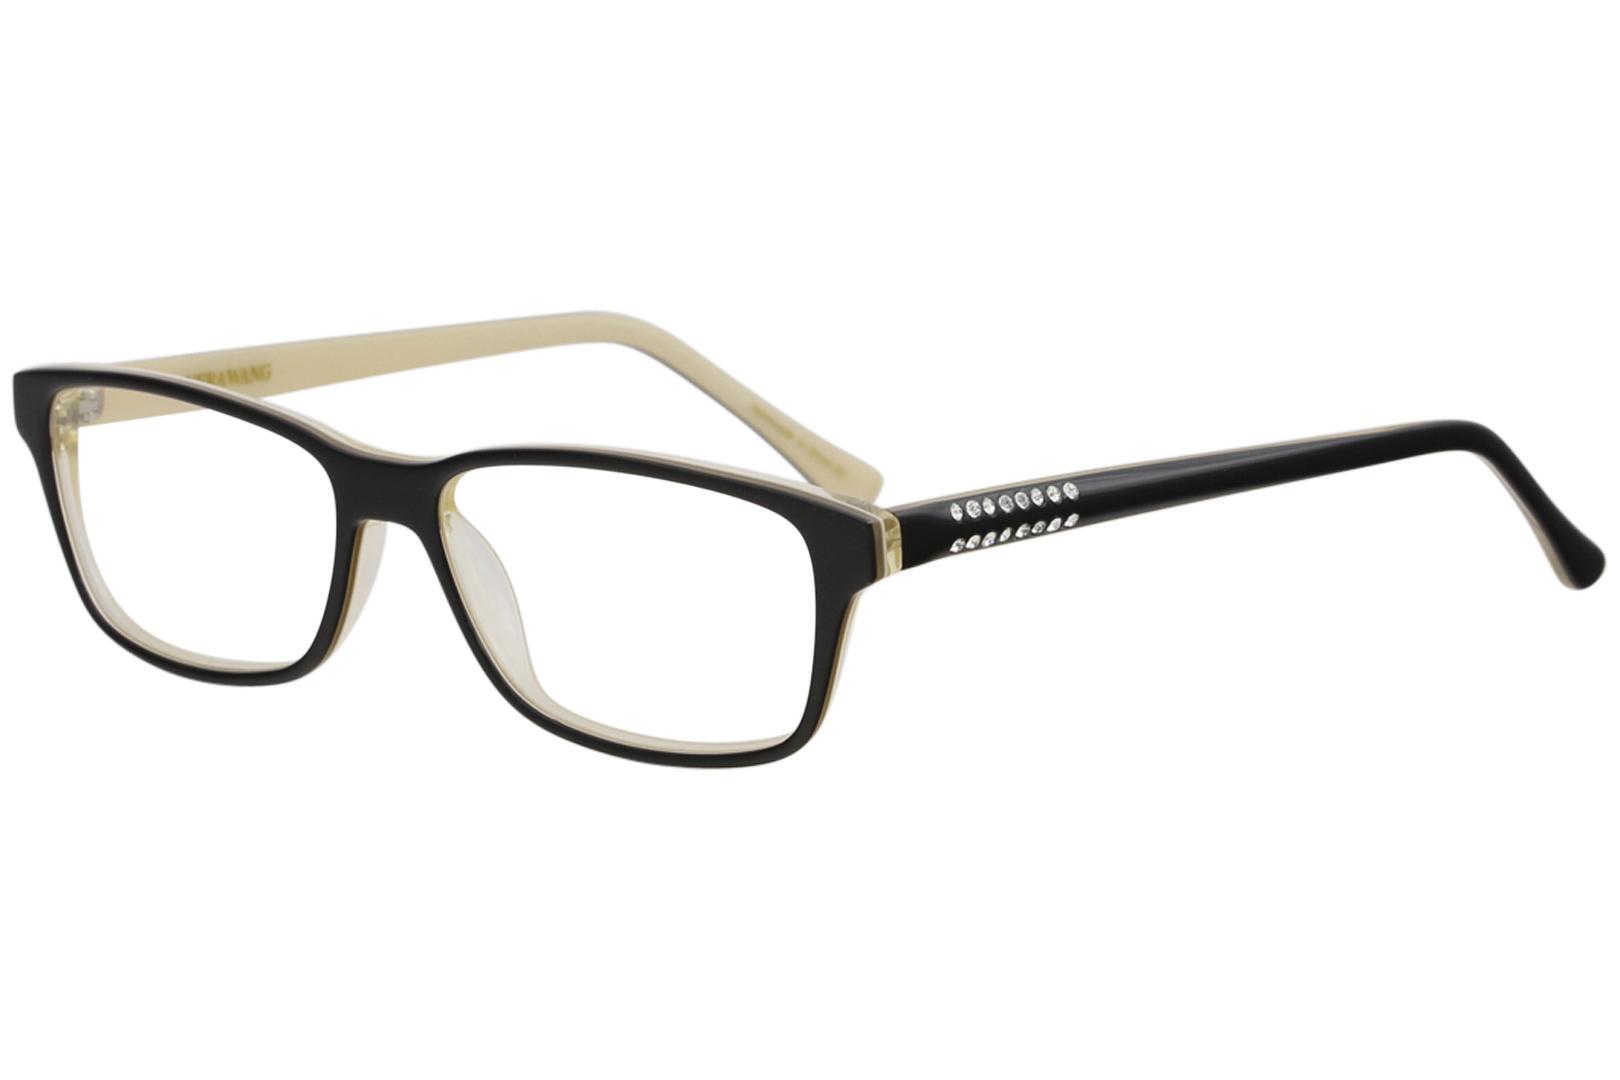 Eyeglasses  Full Rim Optical Frame - Black   BK - Lens 54 Bridge 15 Temple 140mm - Vera Wang Sagatta